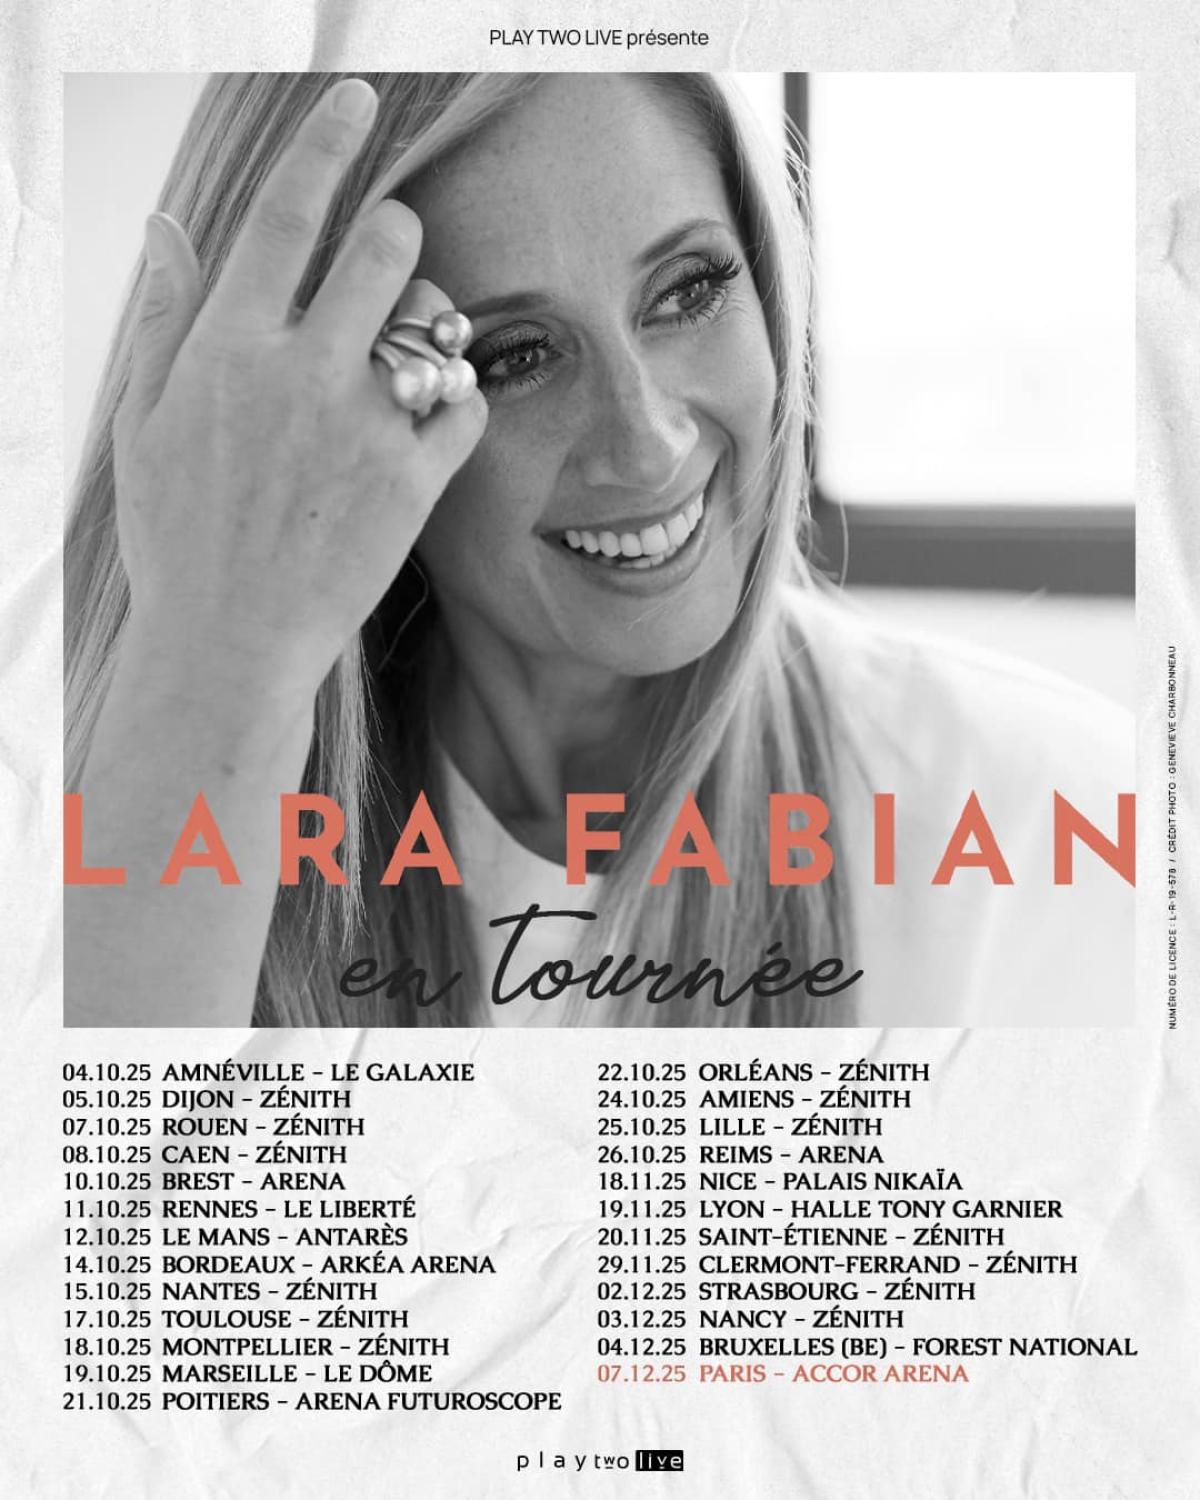 Lara Fabian at Zenith Lille Tickets